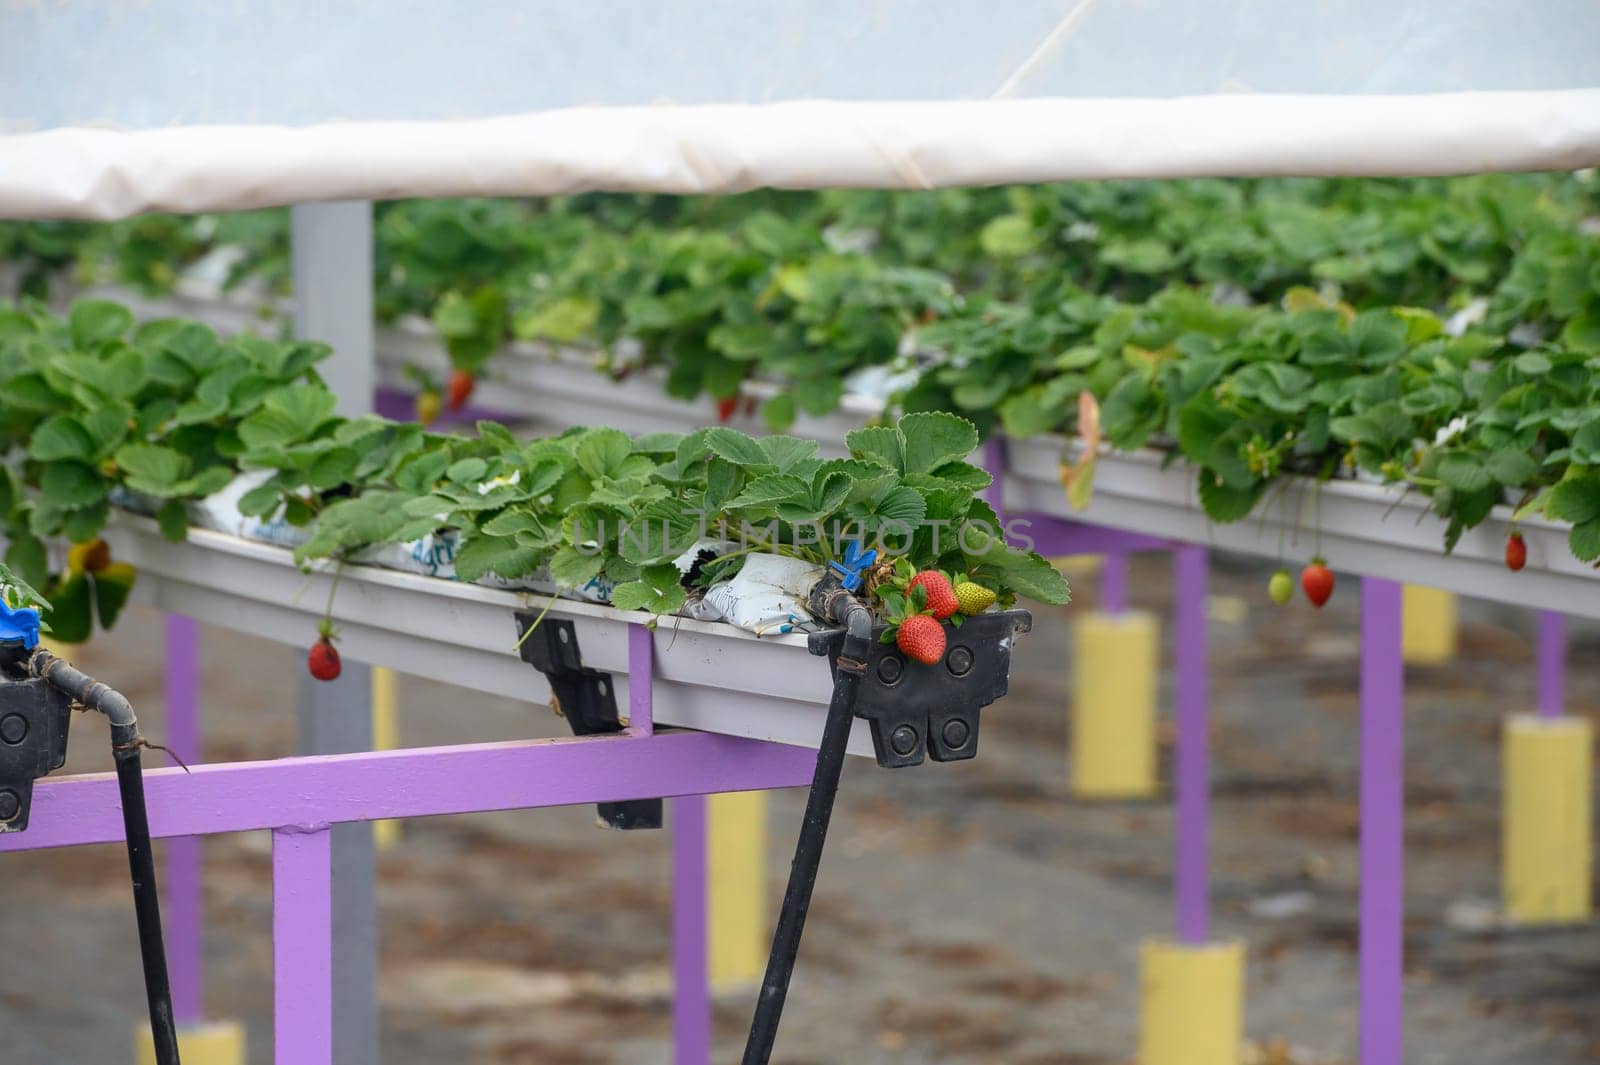 juicy strawberries ripen in a greenhouse in winter in Cyprus 3 by Mixa74